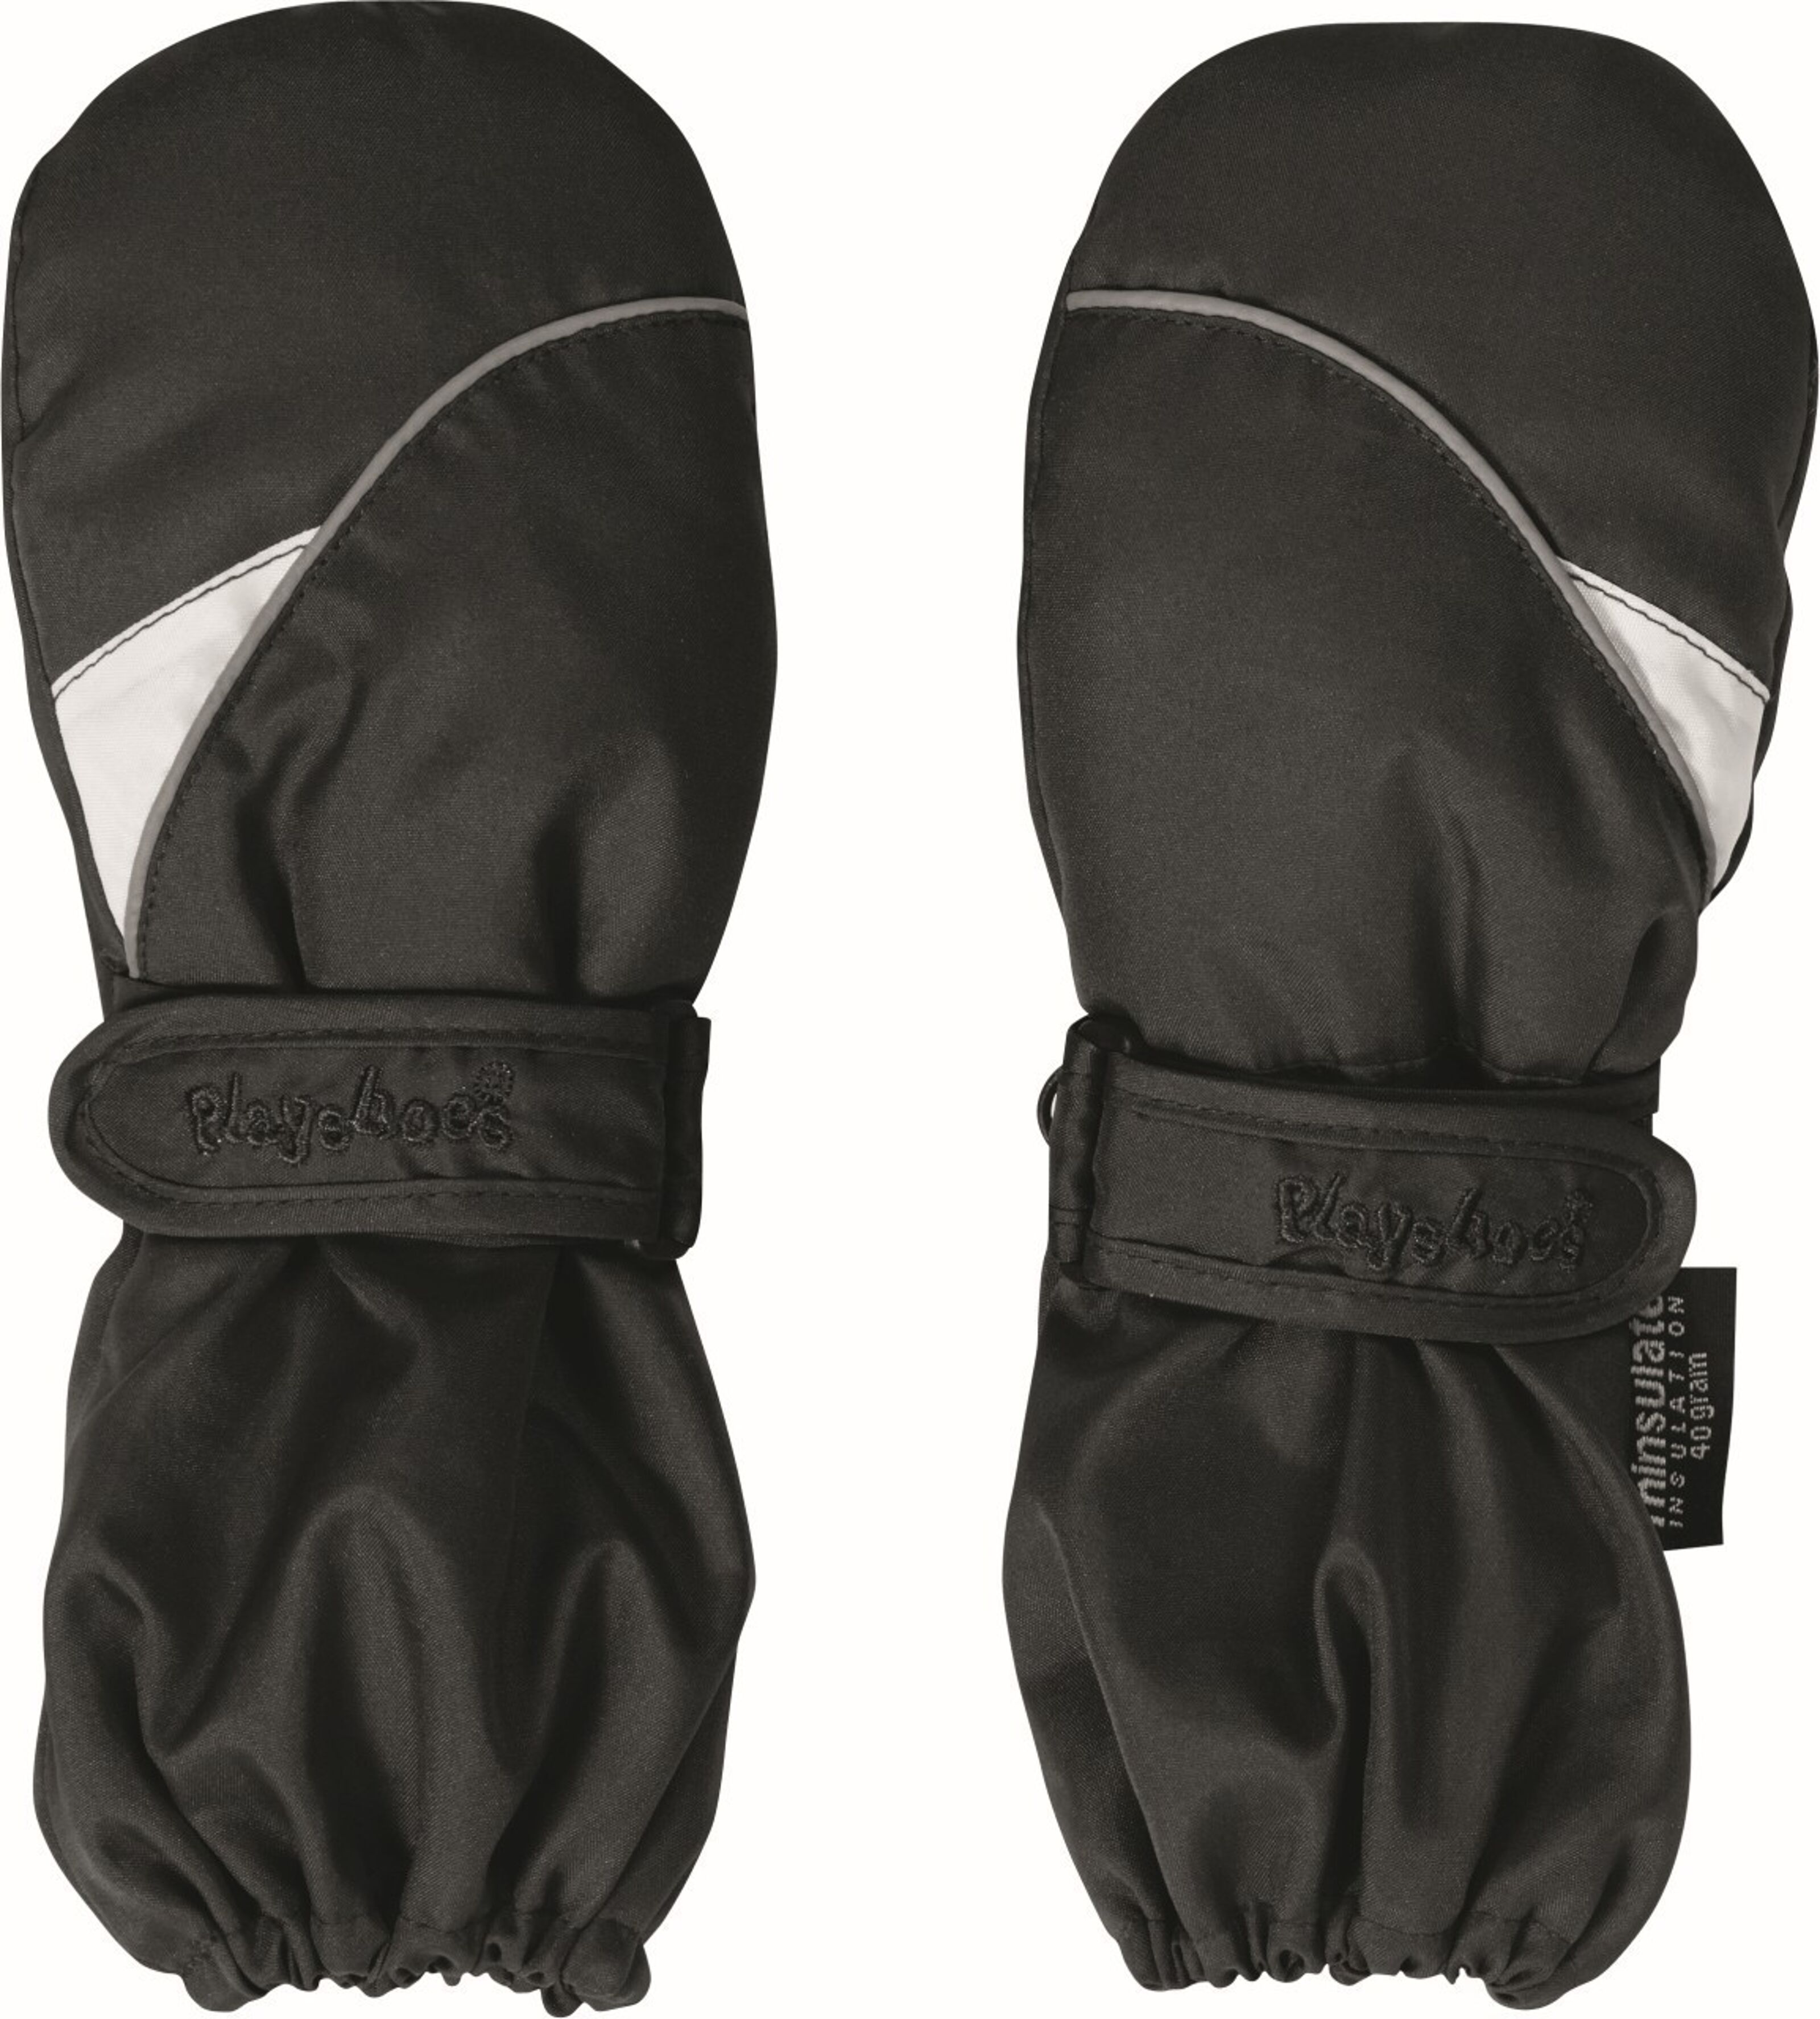 Buy wholesale Mitten glove -black